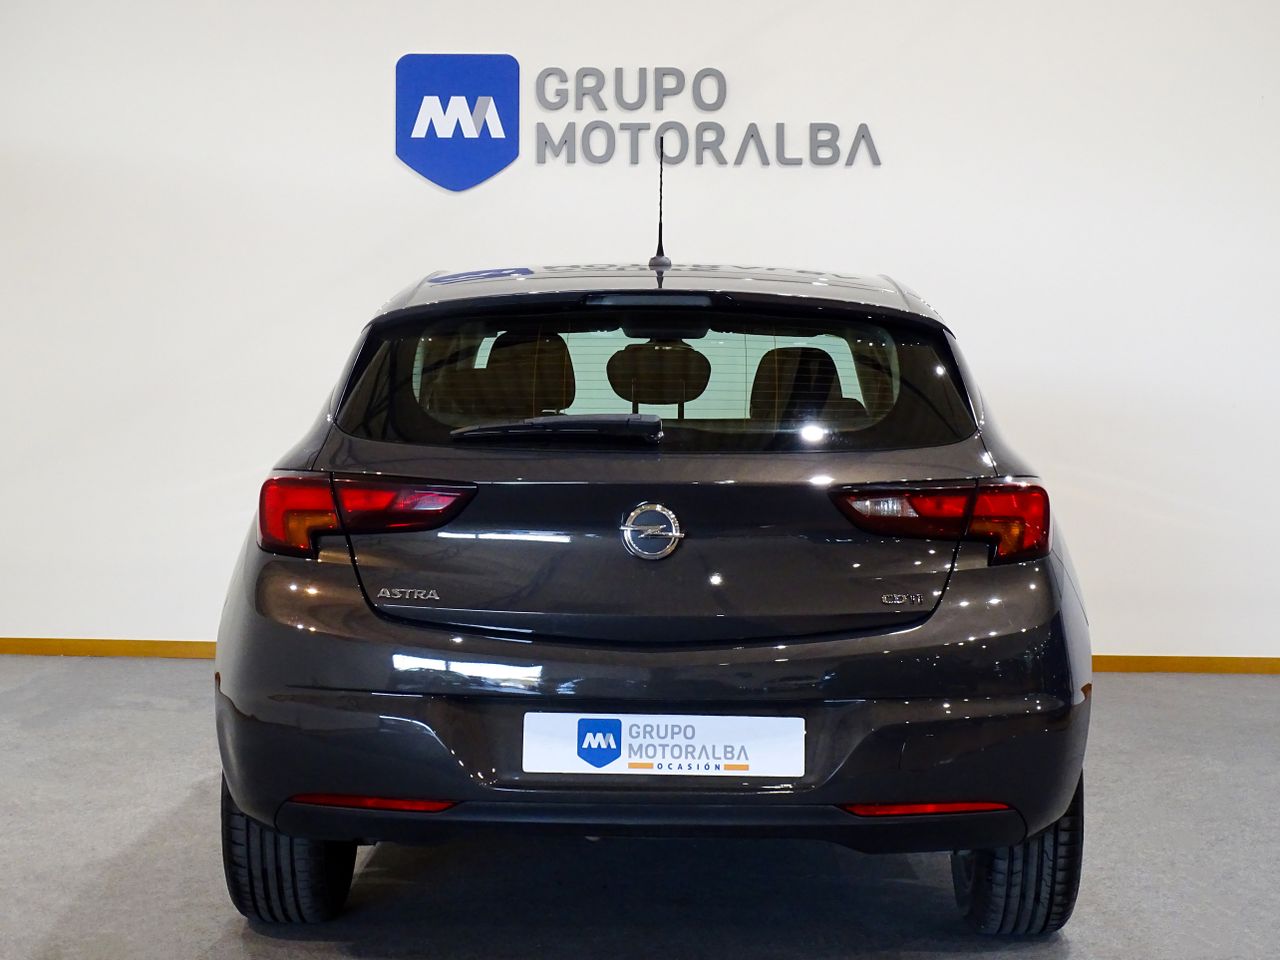 Opel Astra 1.6 CDTi  81kW (110 CV ) Selective  - Foto 2